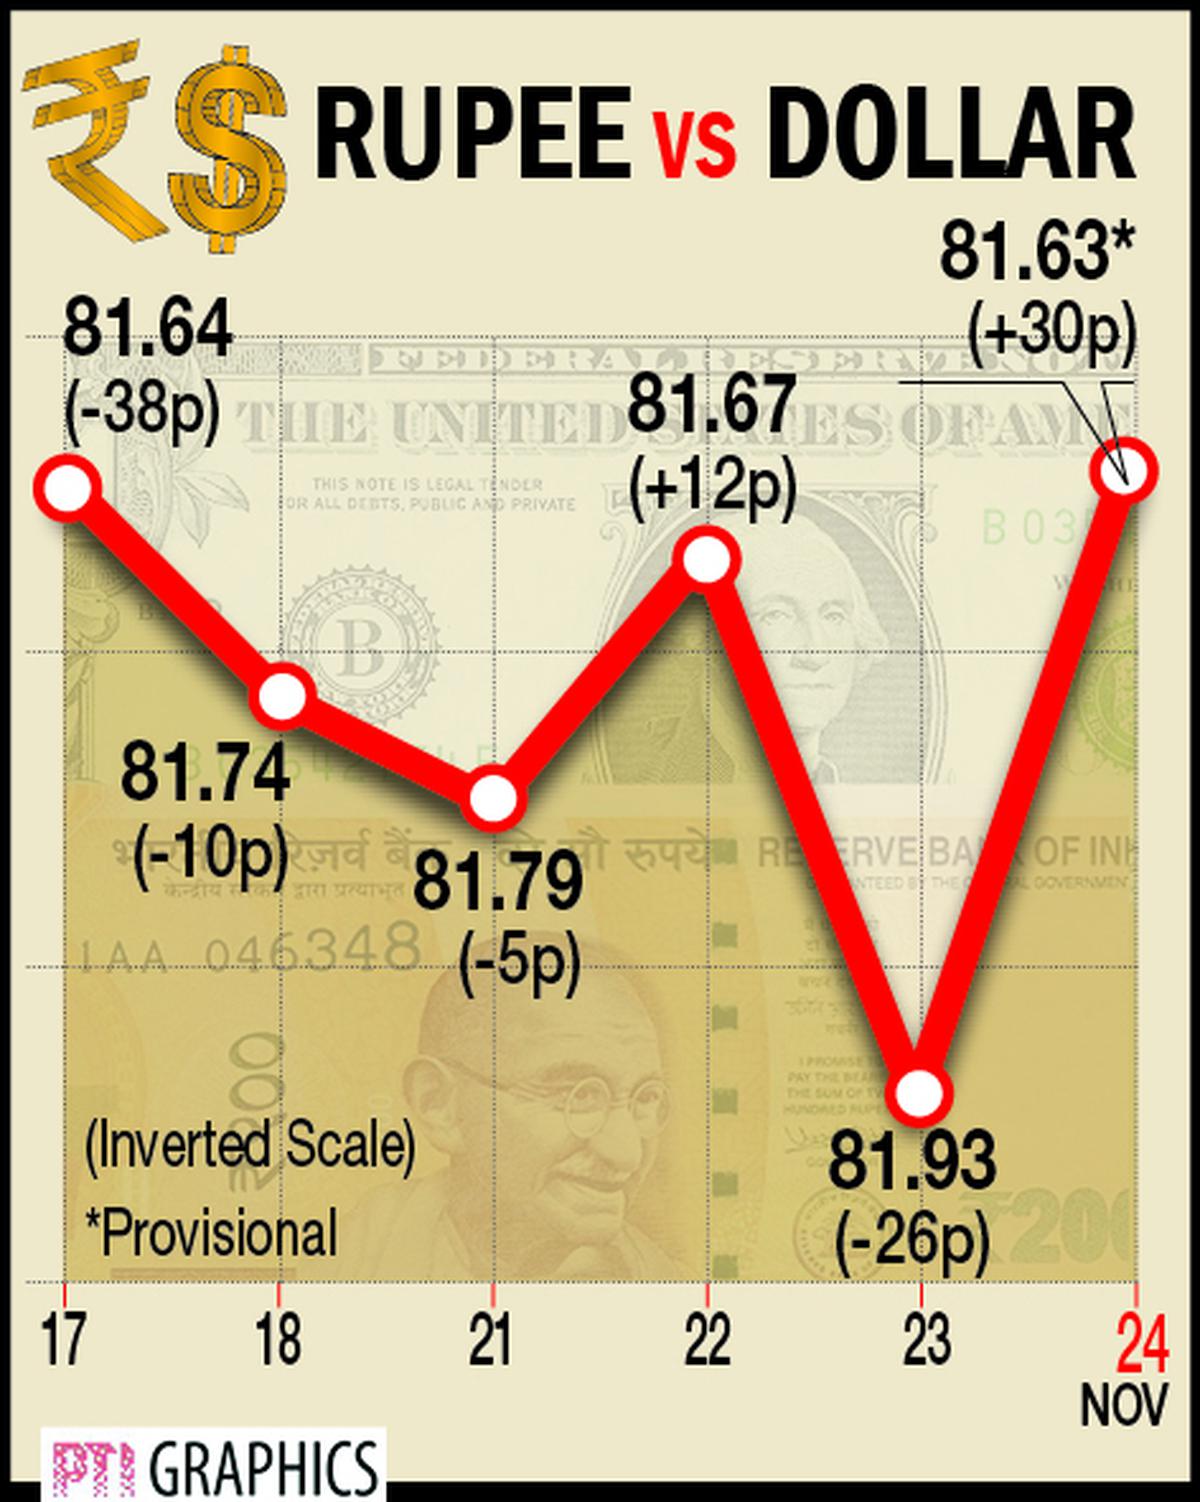 Rupee rises 8 paise to close at 81.62 against U.S. dollar